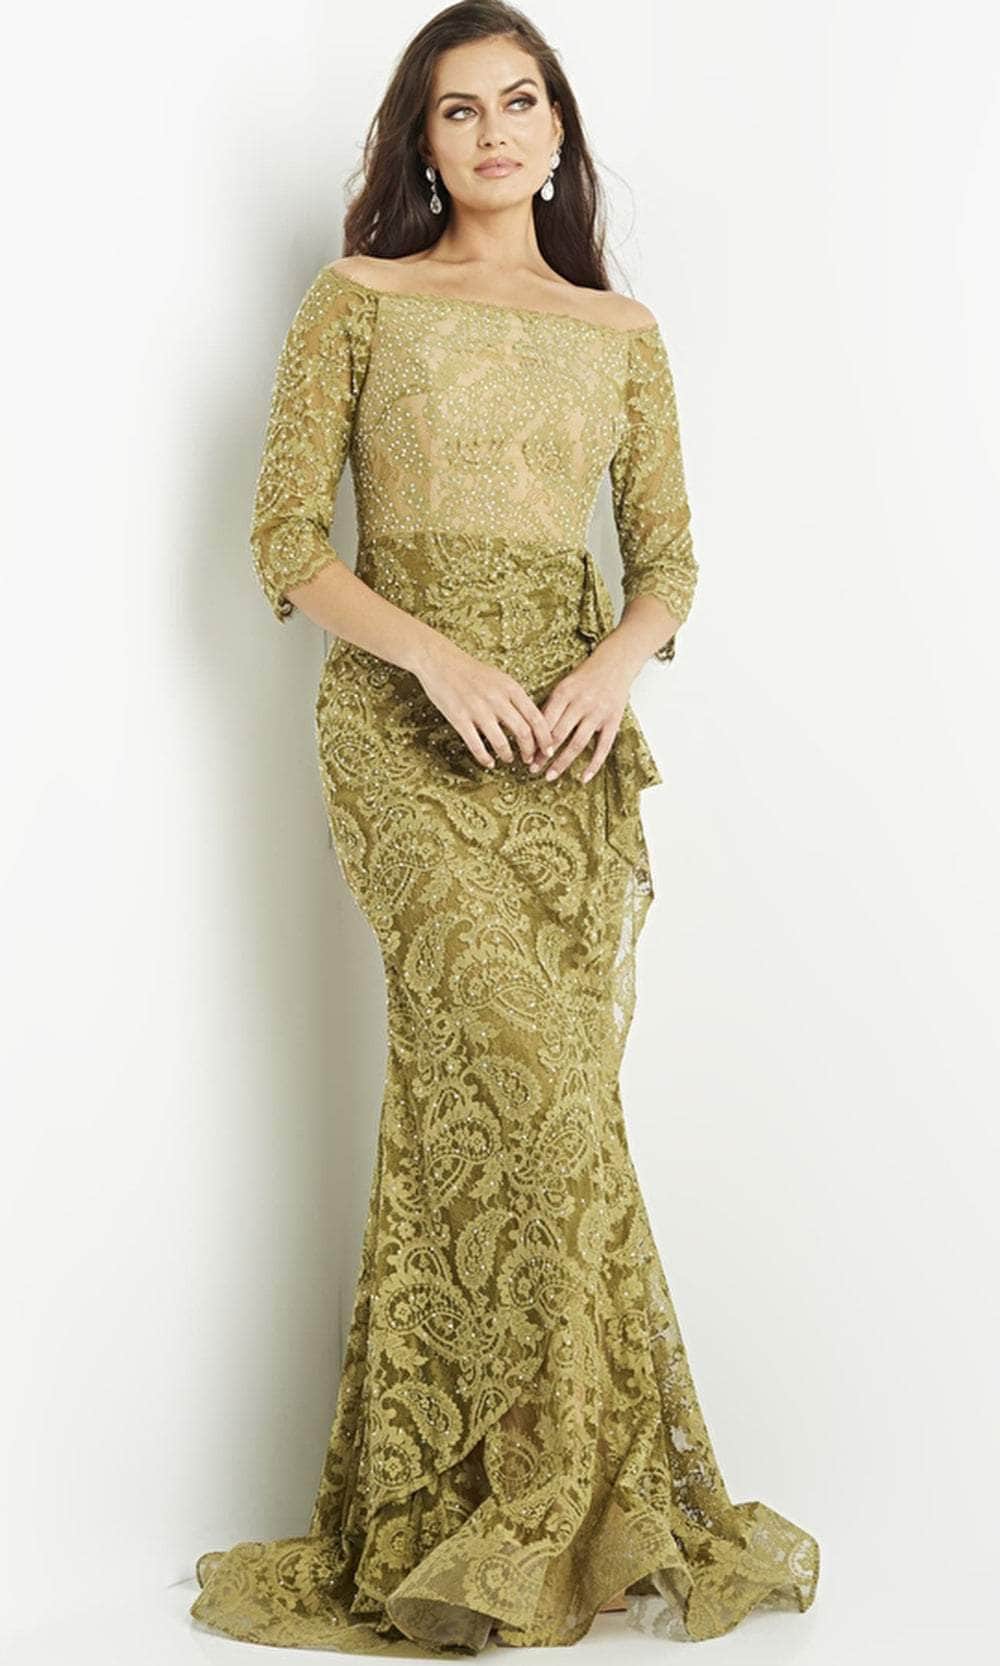 Image of Jovani 23811 - Olive Embellished Lace Evening Gown